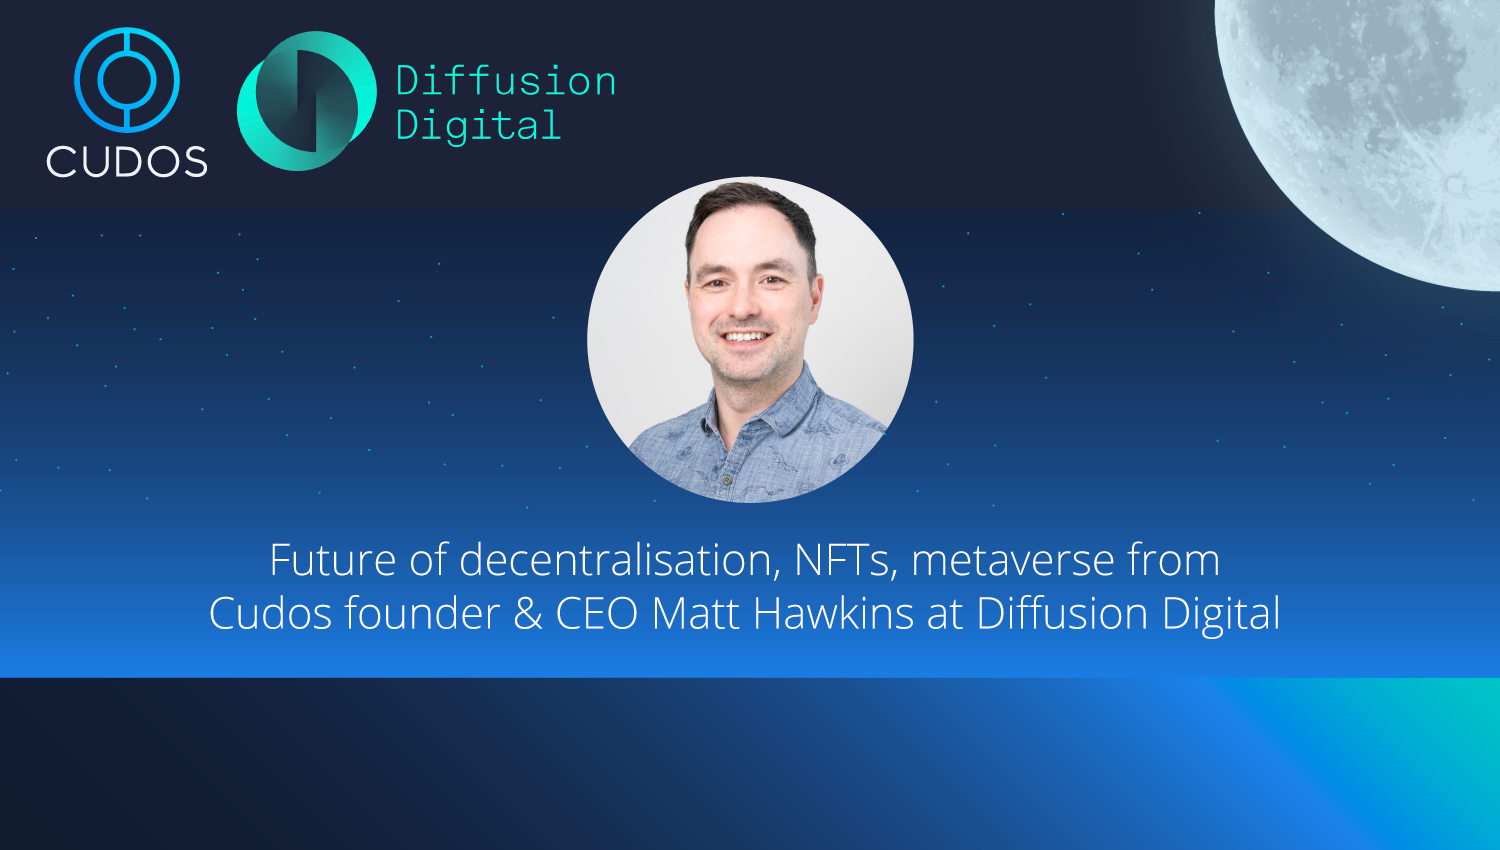 Cudos Founder & CEO Matt Hawkins to discuss decentralisation & metaverse at Diffusion Digital